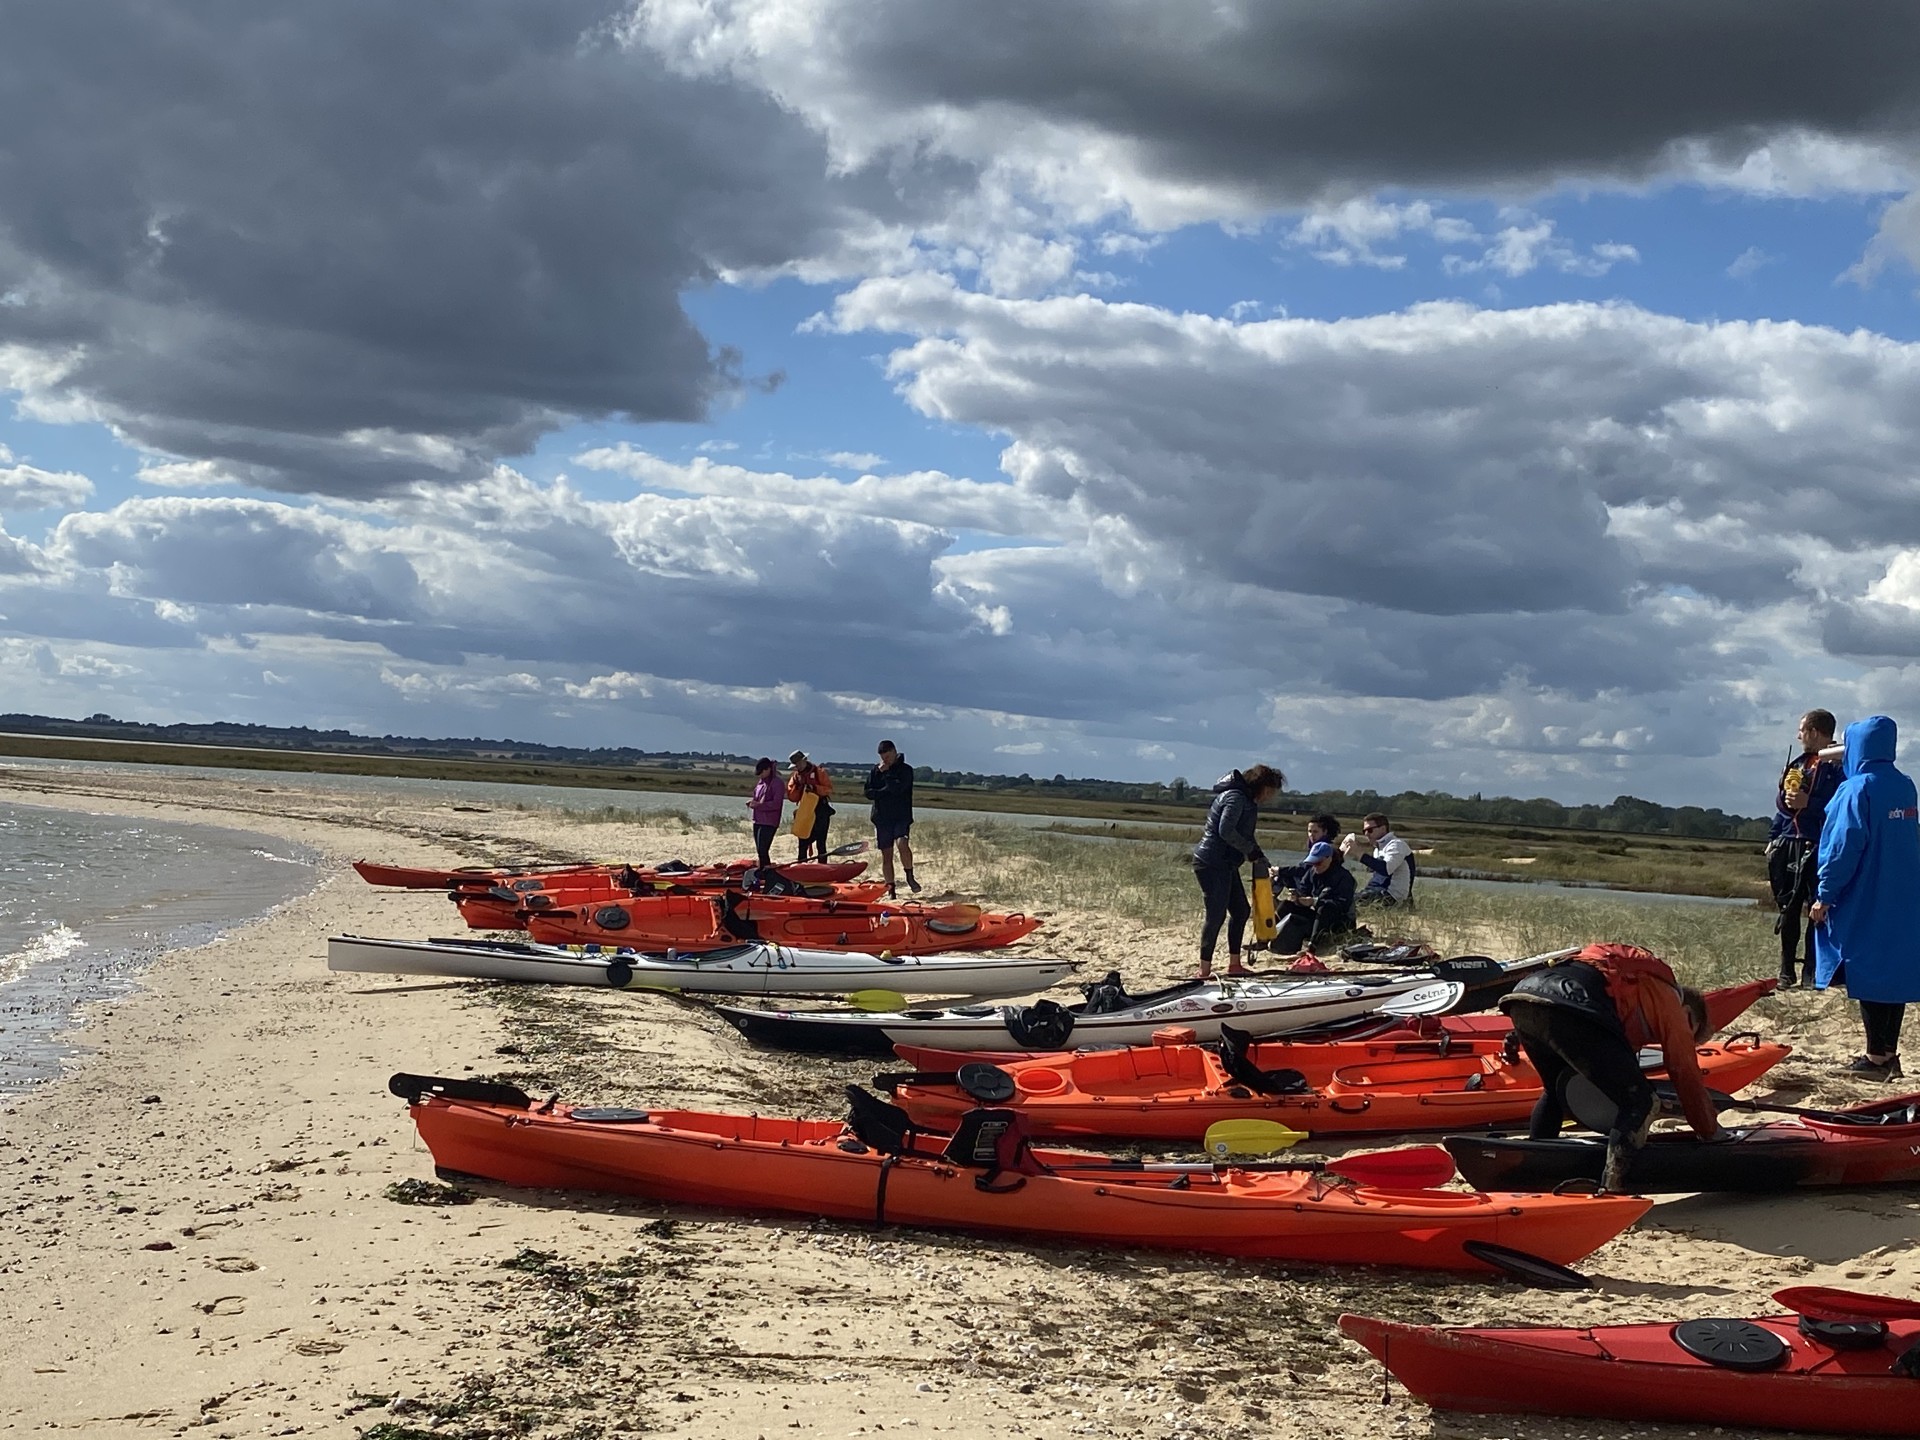 Sea kjayalks landed on a sandy beach on the Seal Colony Eco kayak tour with NOMAD Sea Kayaking.